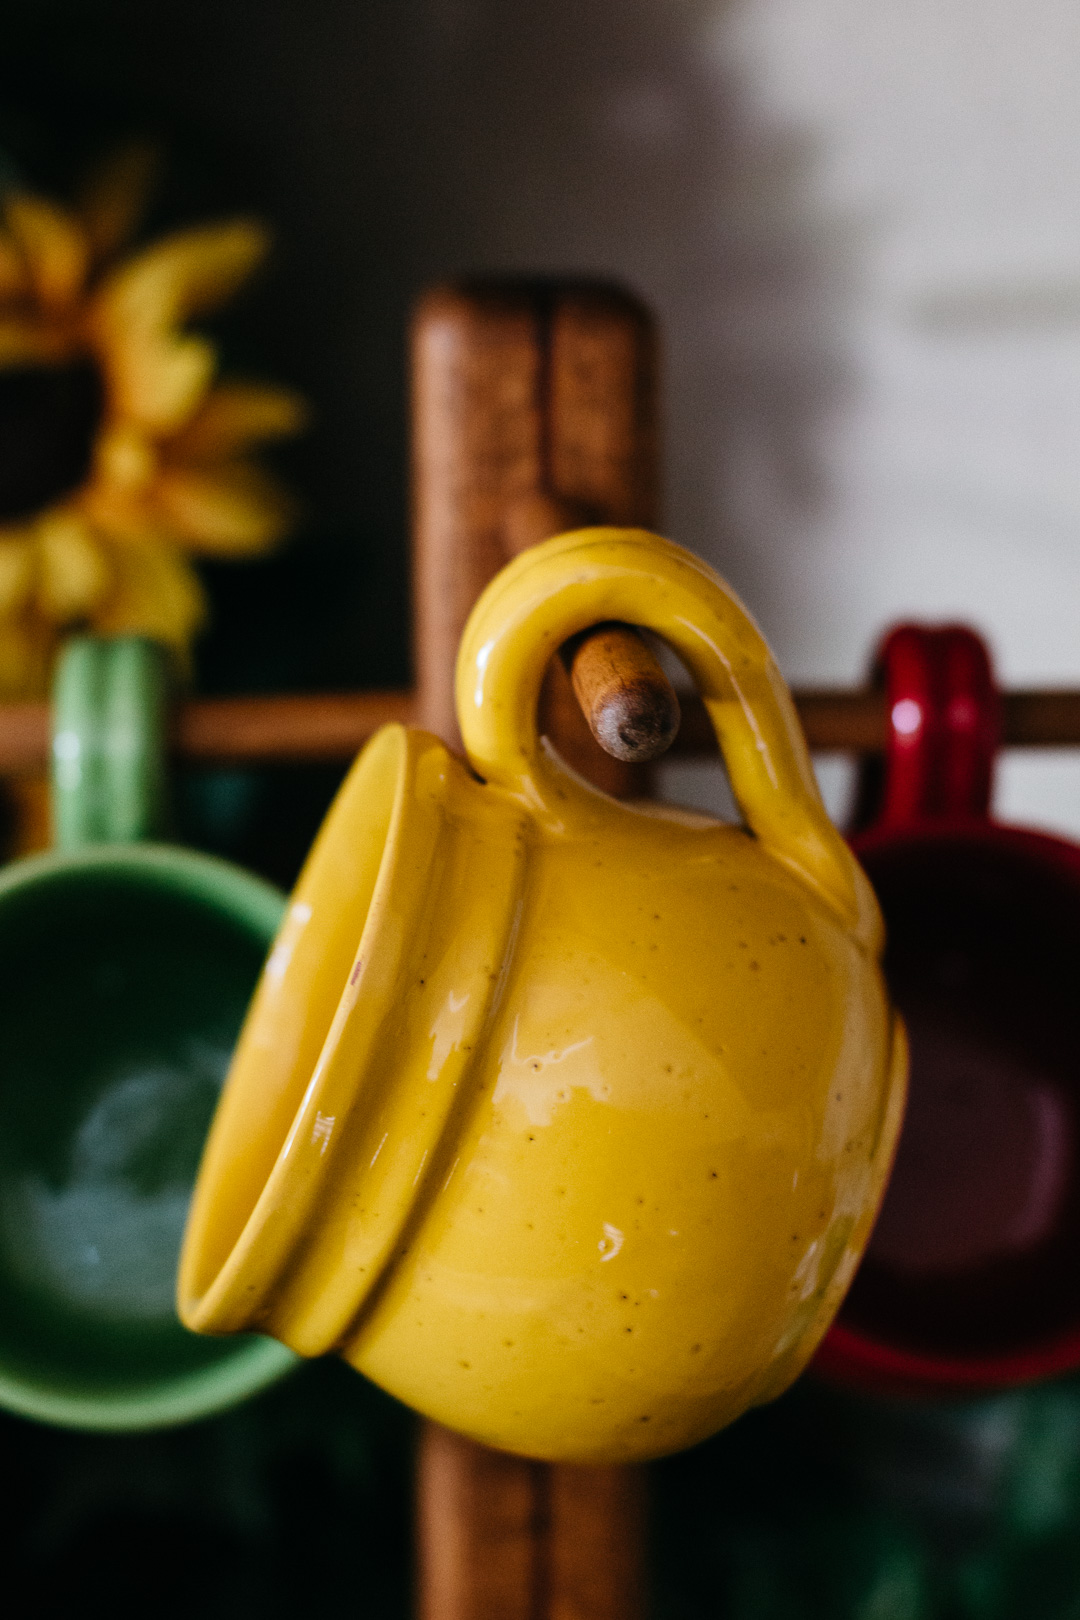 A close up of a ceramic mug hanging from a wooden mug rack.